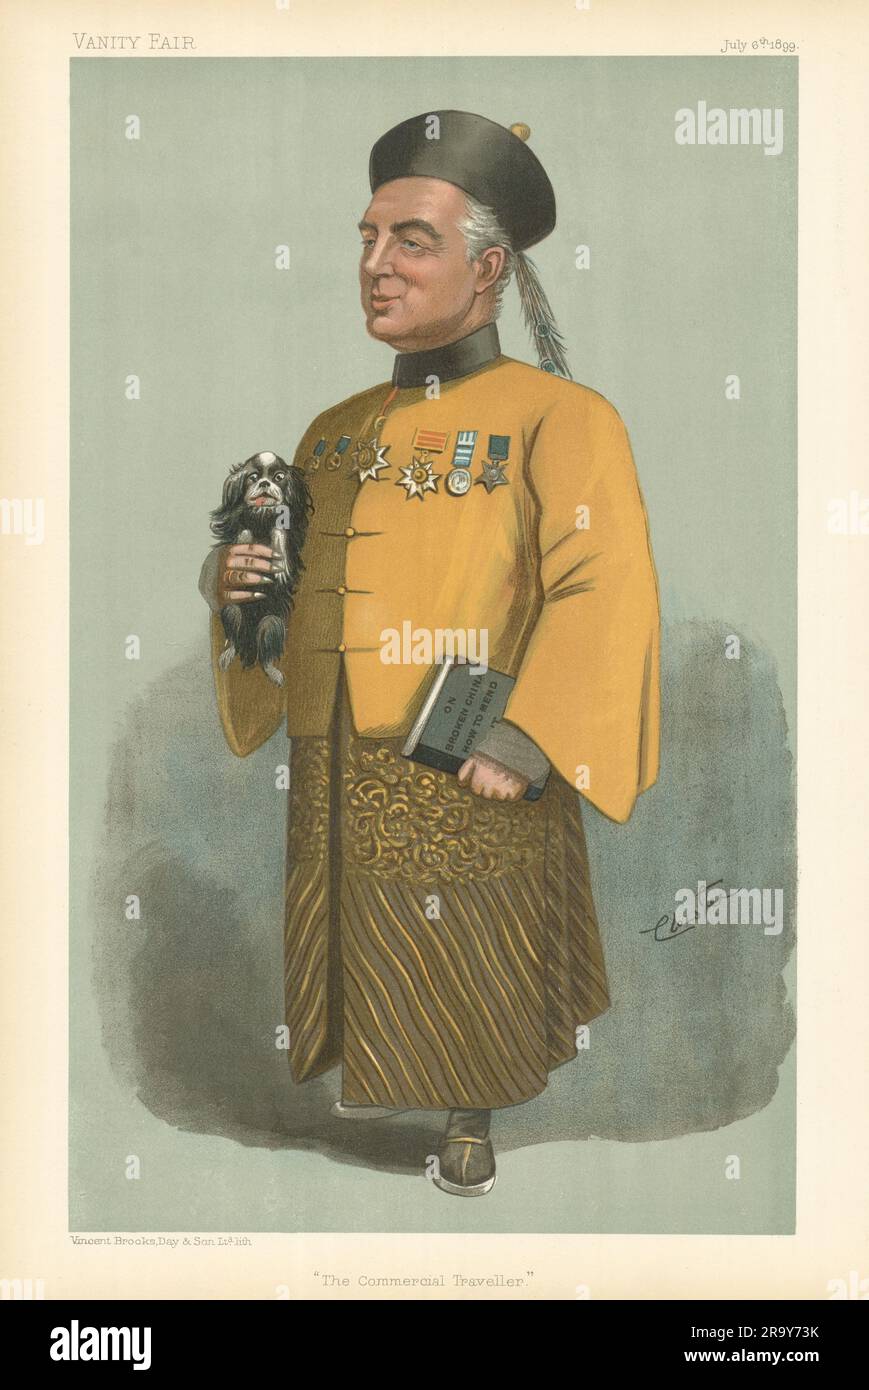 VANITY FAIR SPY CARTOON Charles Beresford 'The Commercial Traveller'. China 1899 Stock Photo